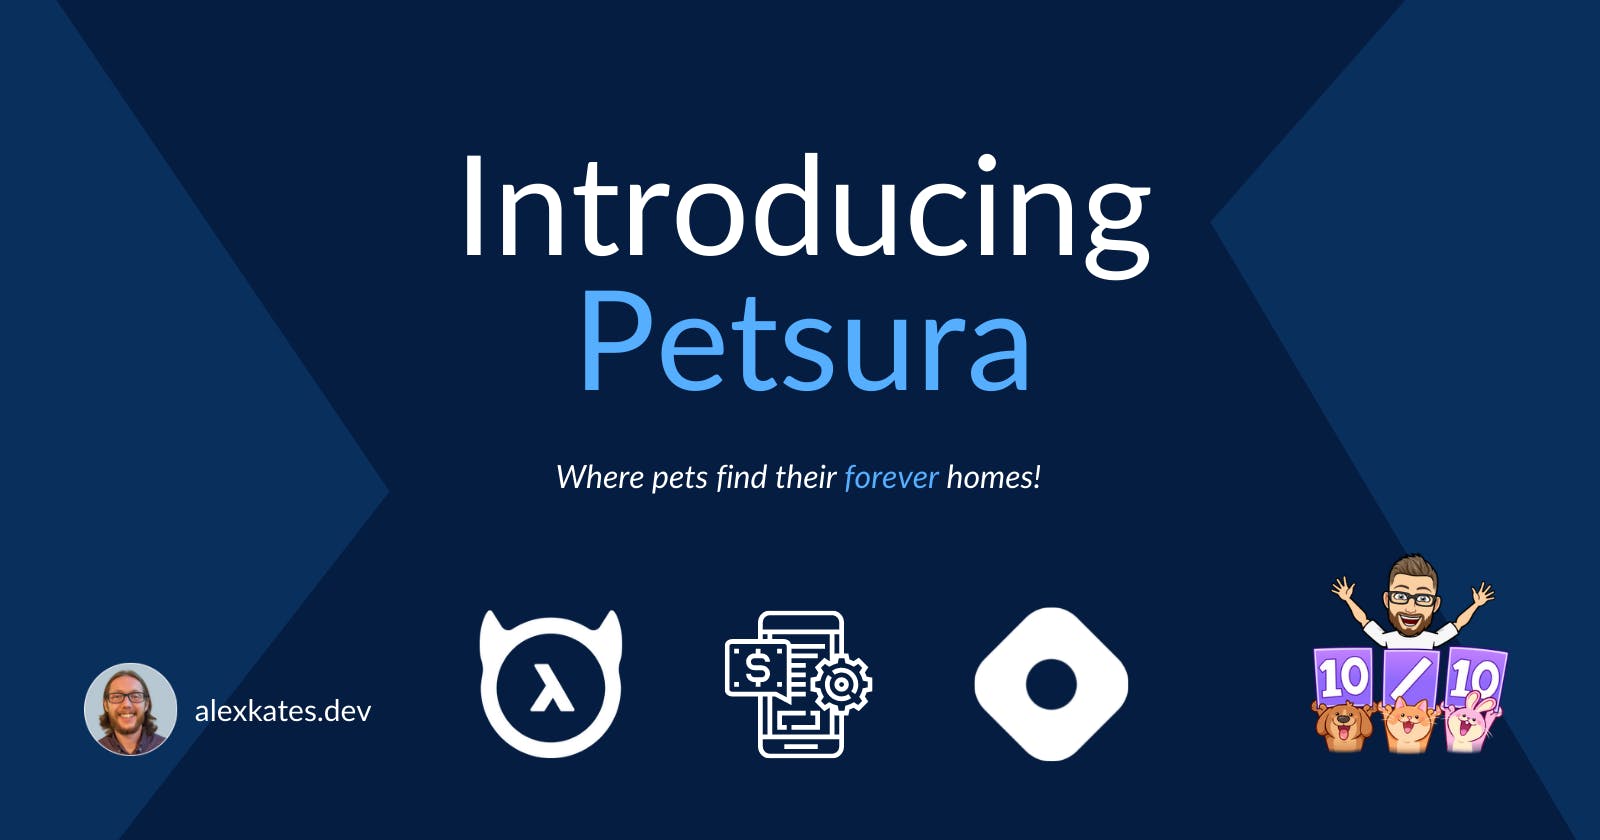 Introducing Petsura